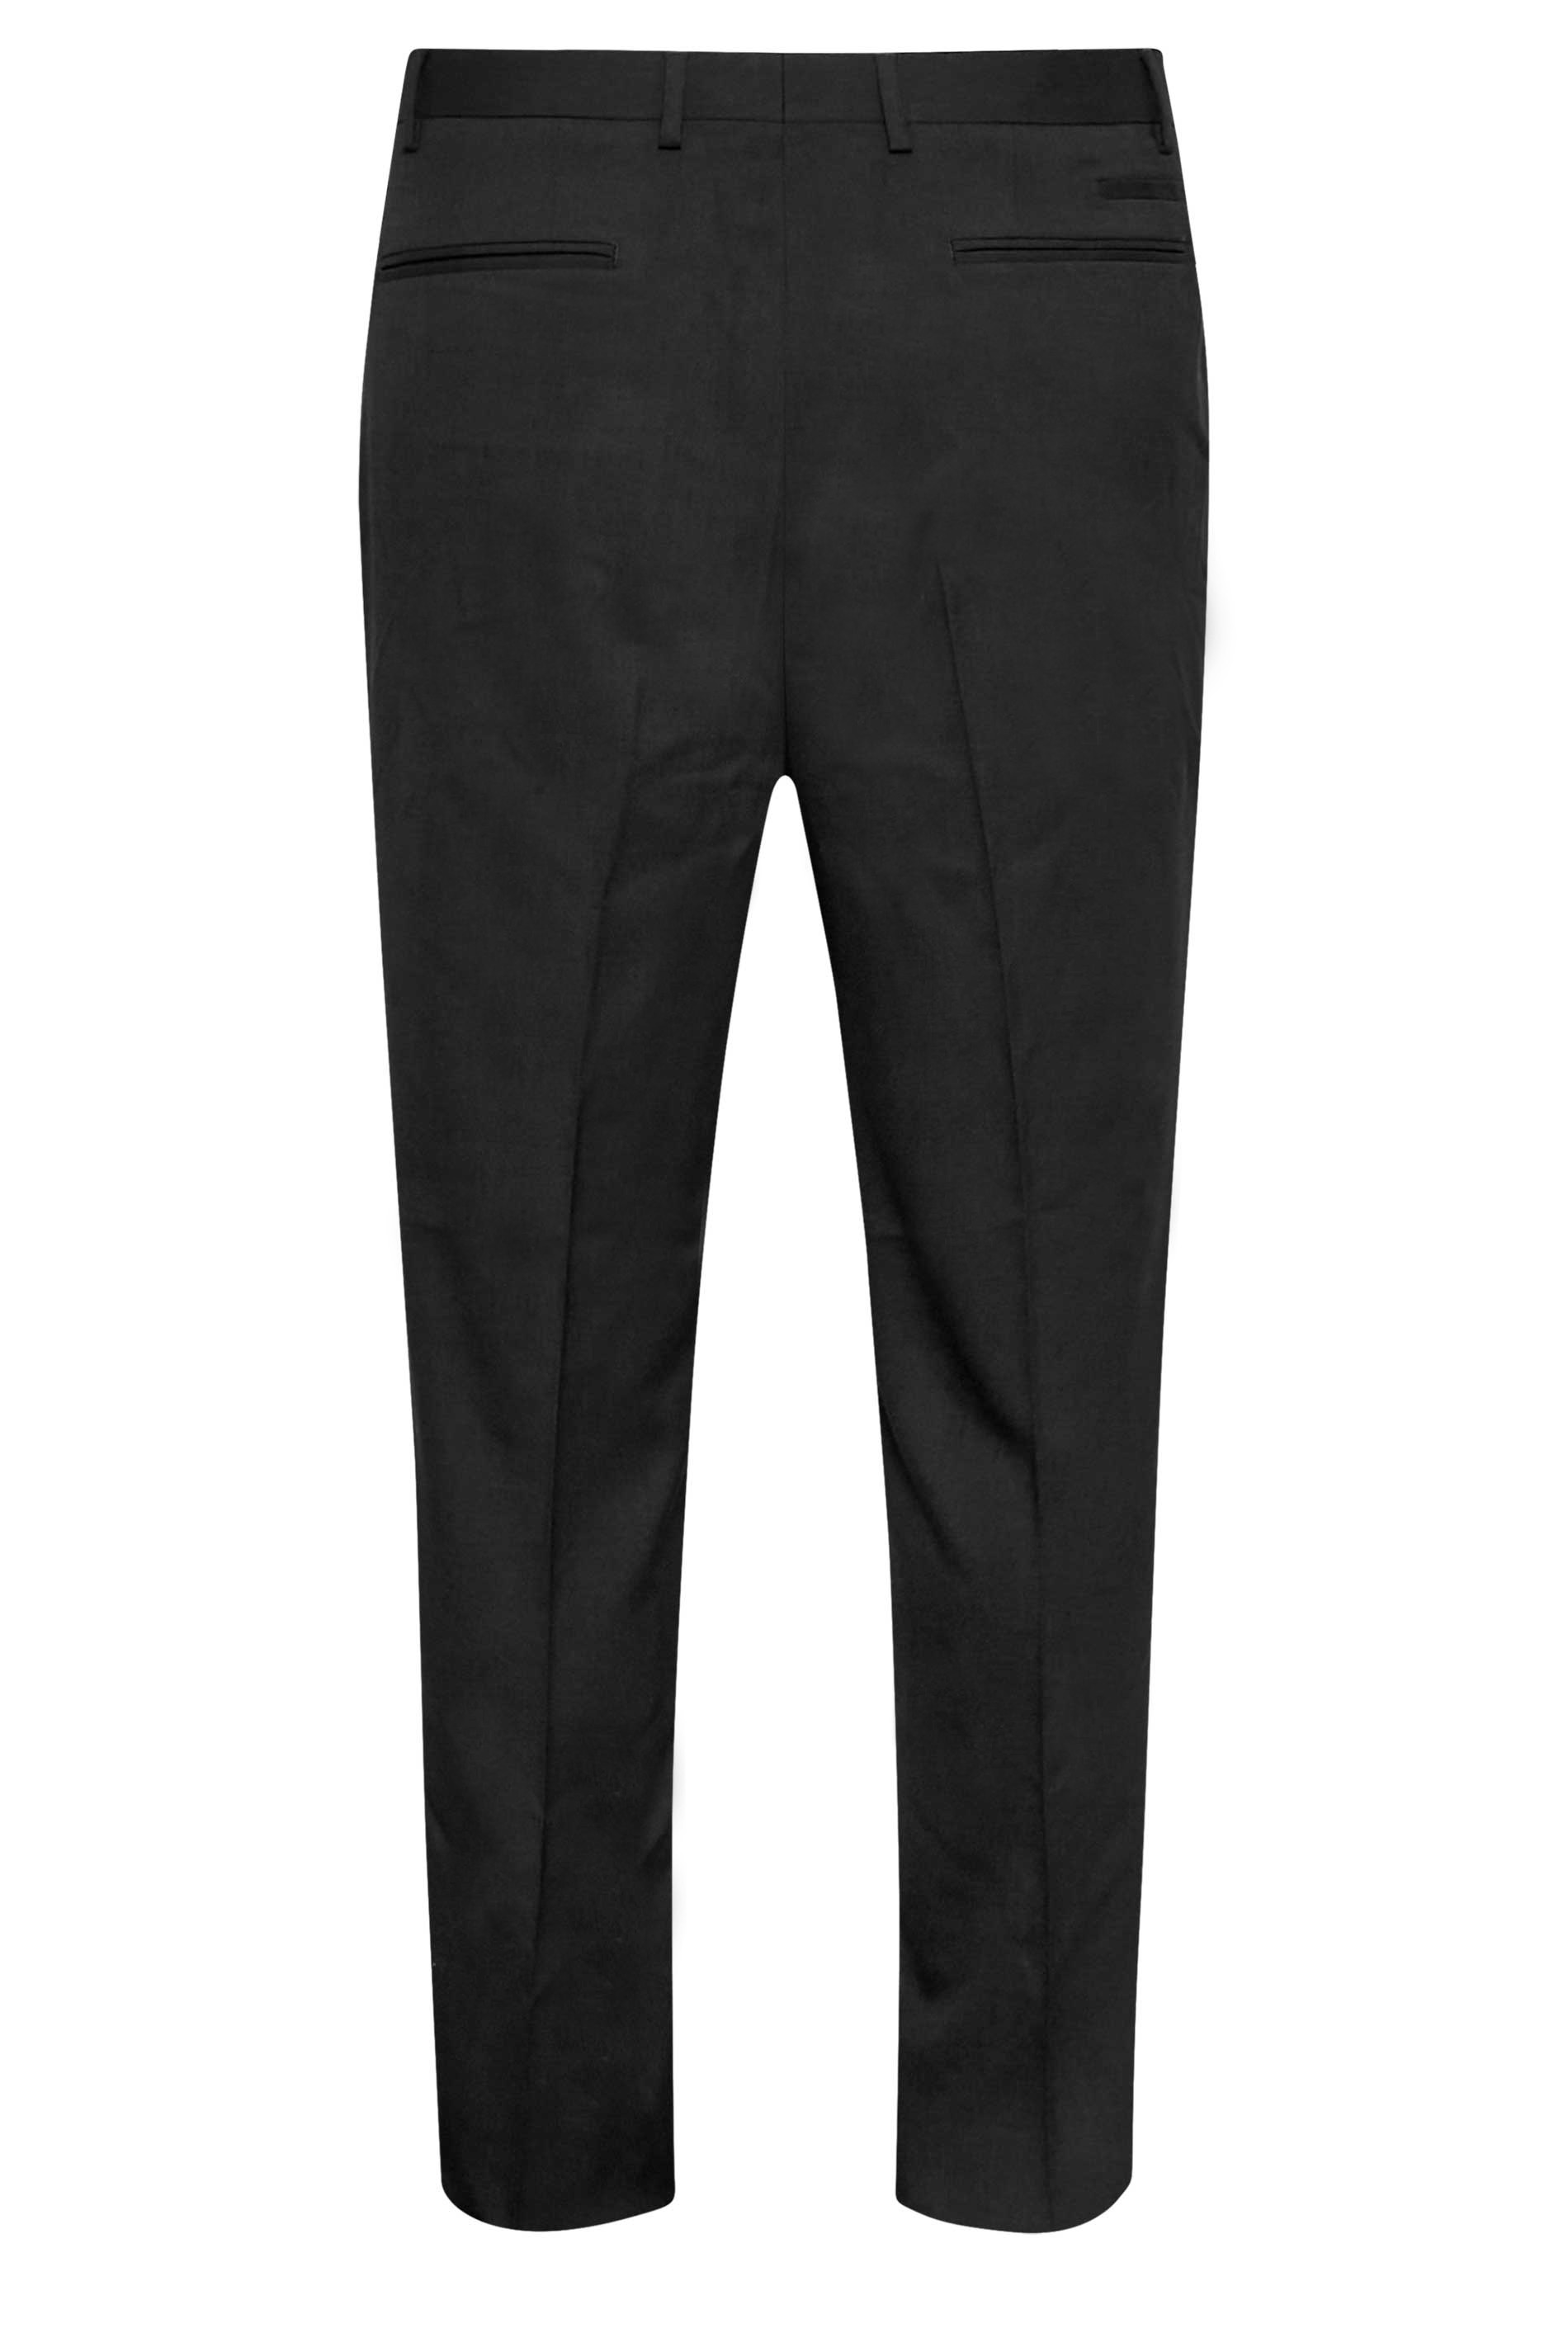 BadRhino Black Plain Suit Trousers